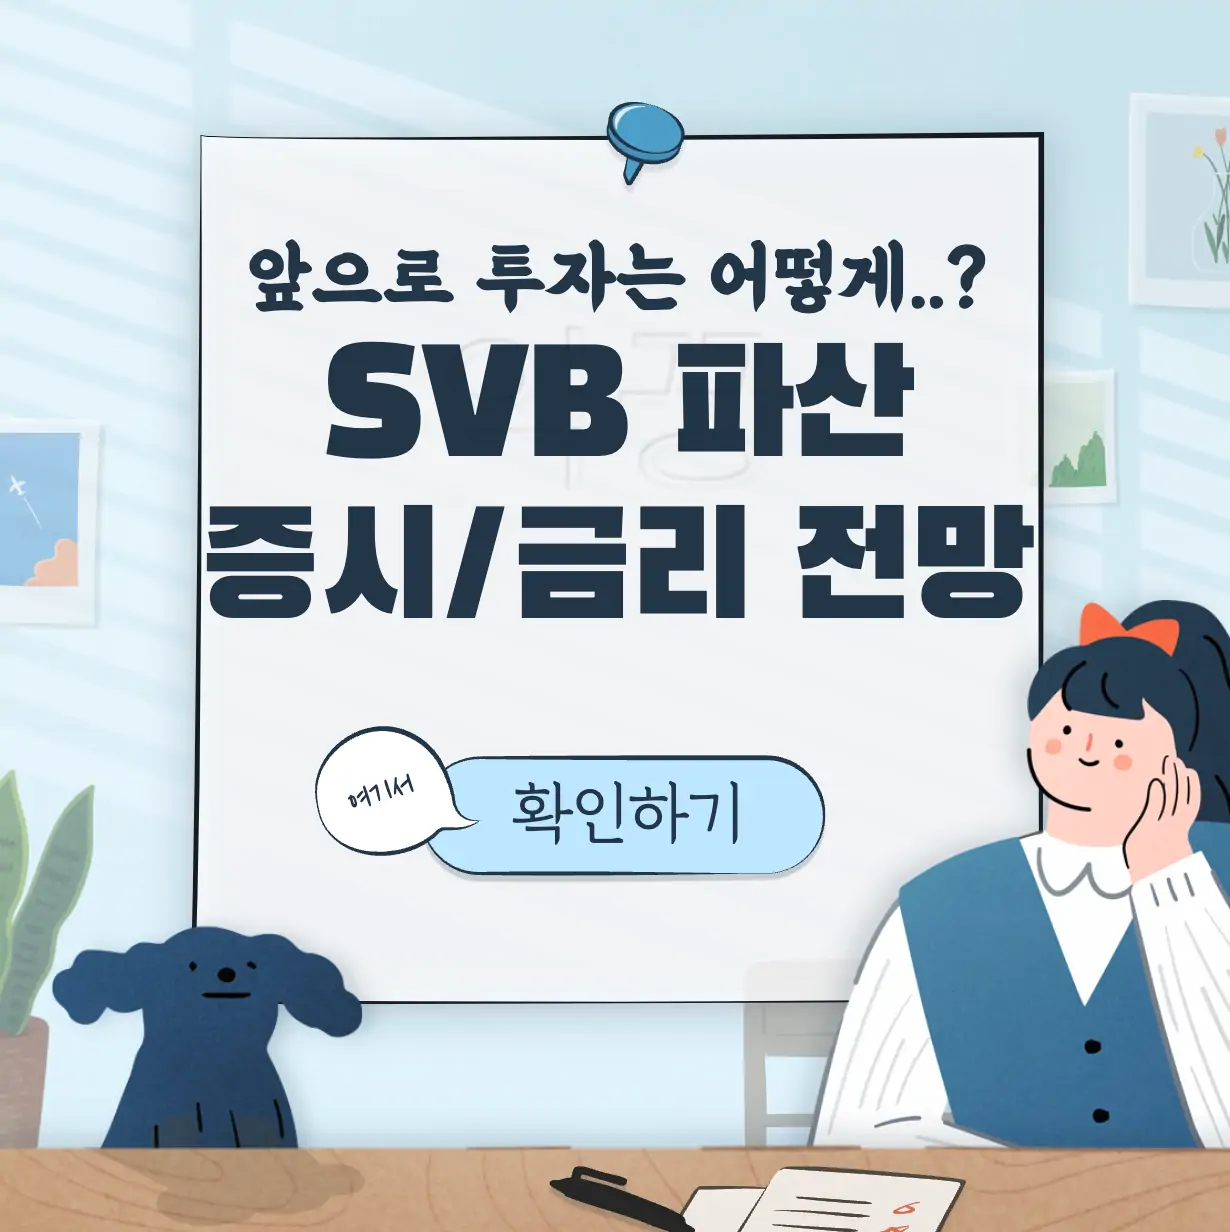 SVB Financial Group 파산이자 전망 커버